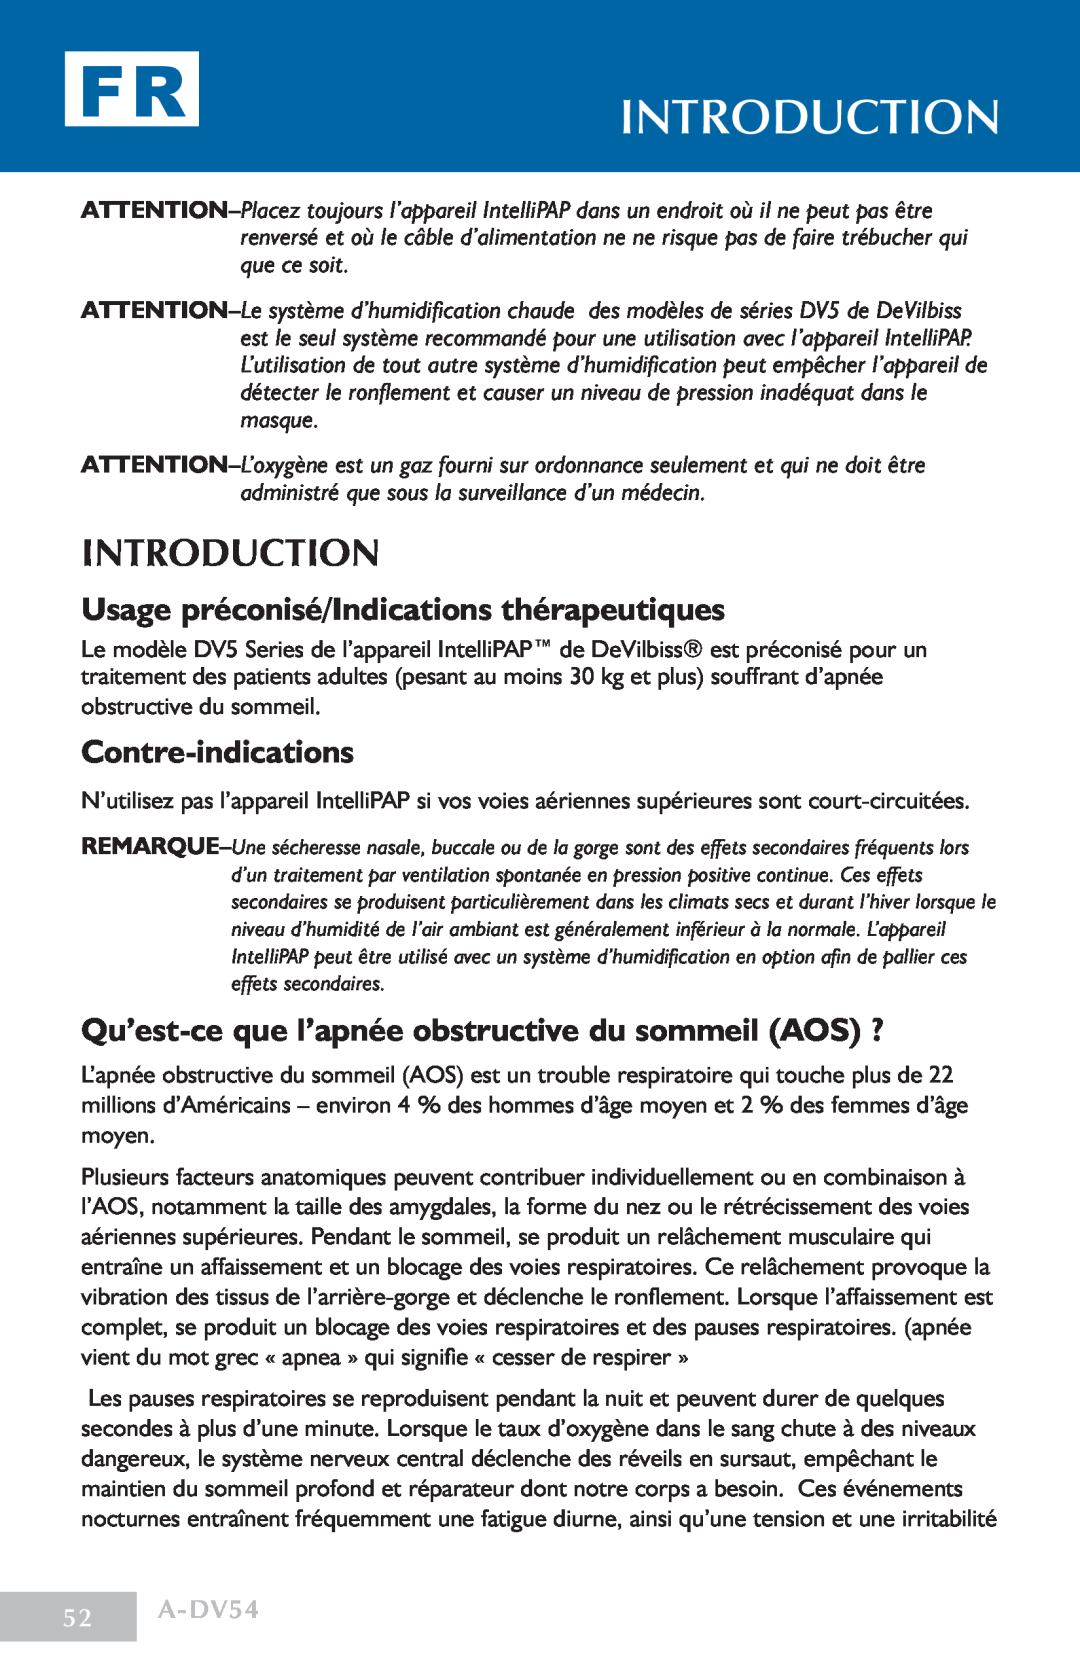 DeVillbiss Air Power Company manual Usage préconisé/Indications thérapeutiques, Contre-indications, A-DV54, introduction 